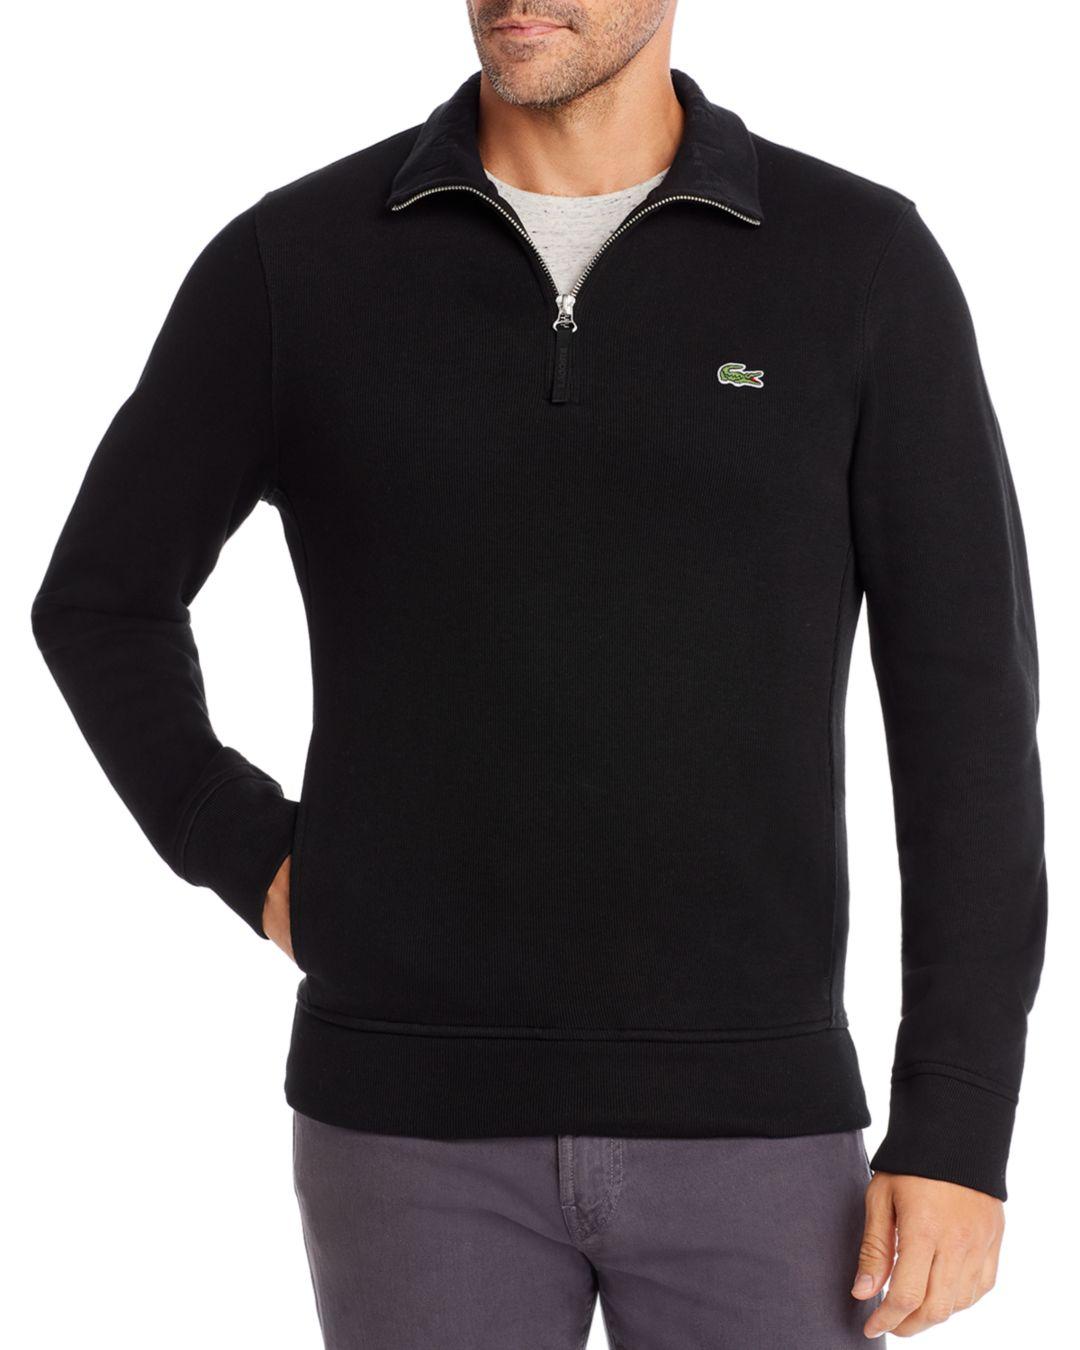 Lacoste Cotton Quarter - Zip Classic Fit Sweater in Black for Men - Lyst